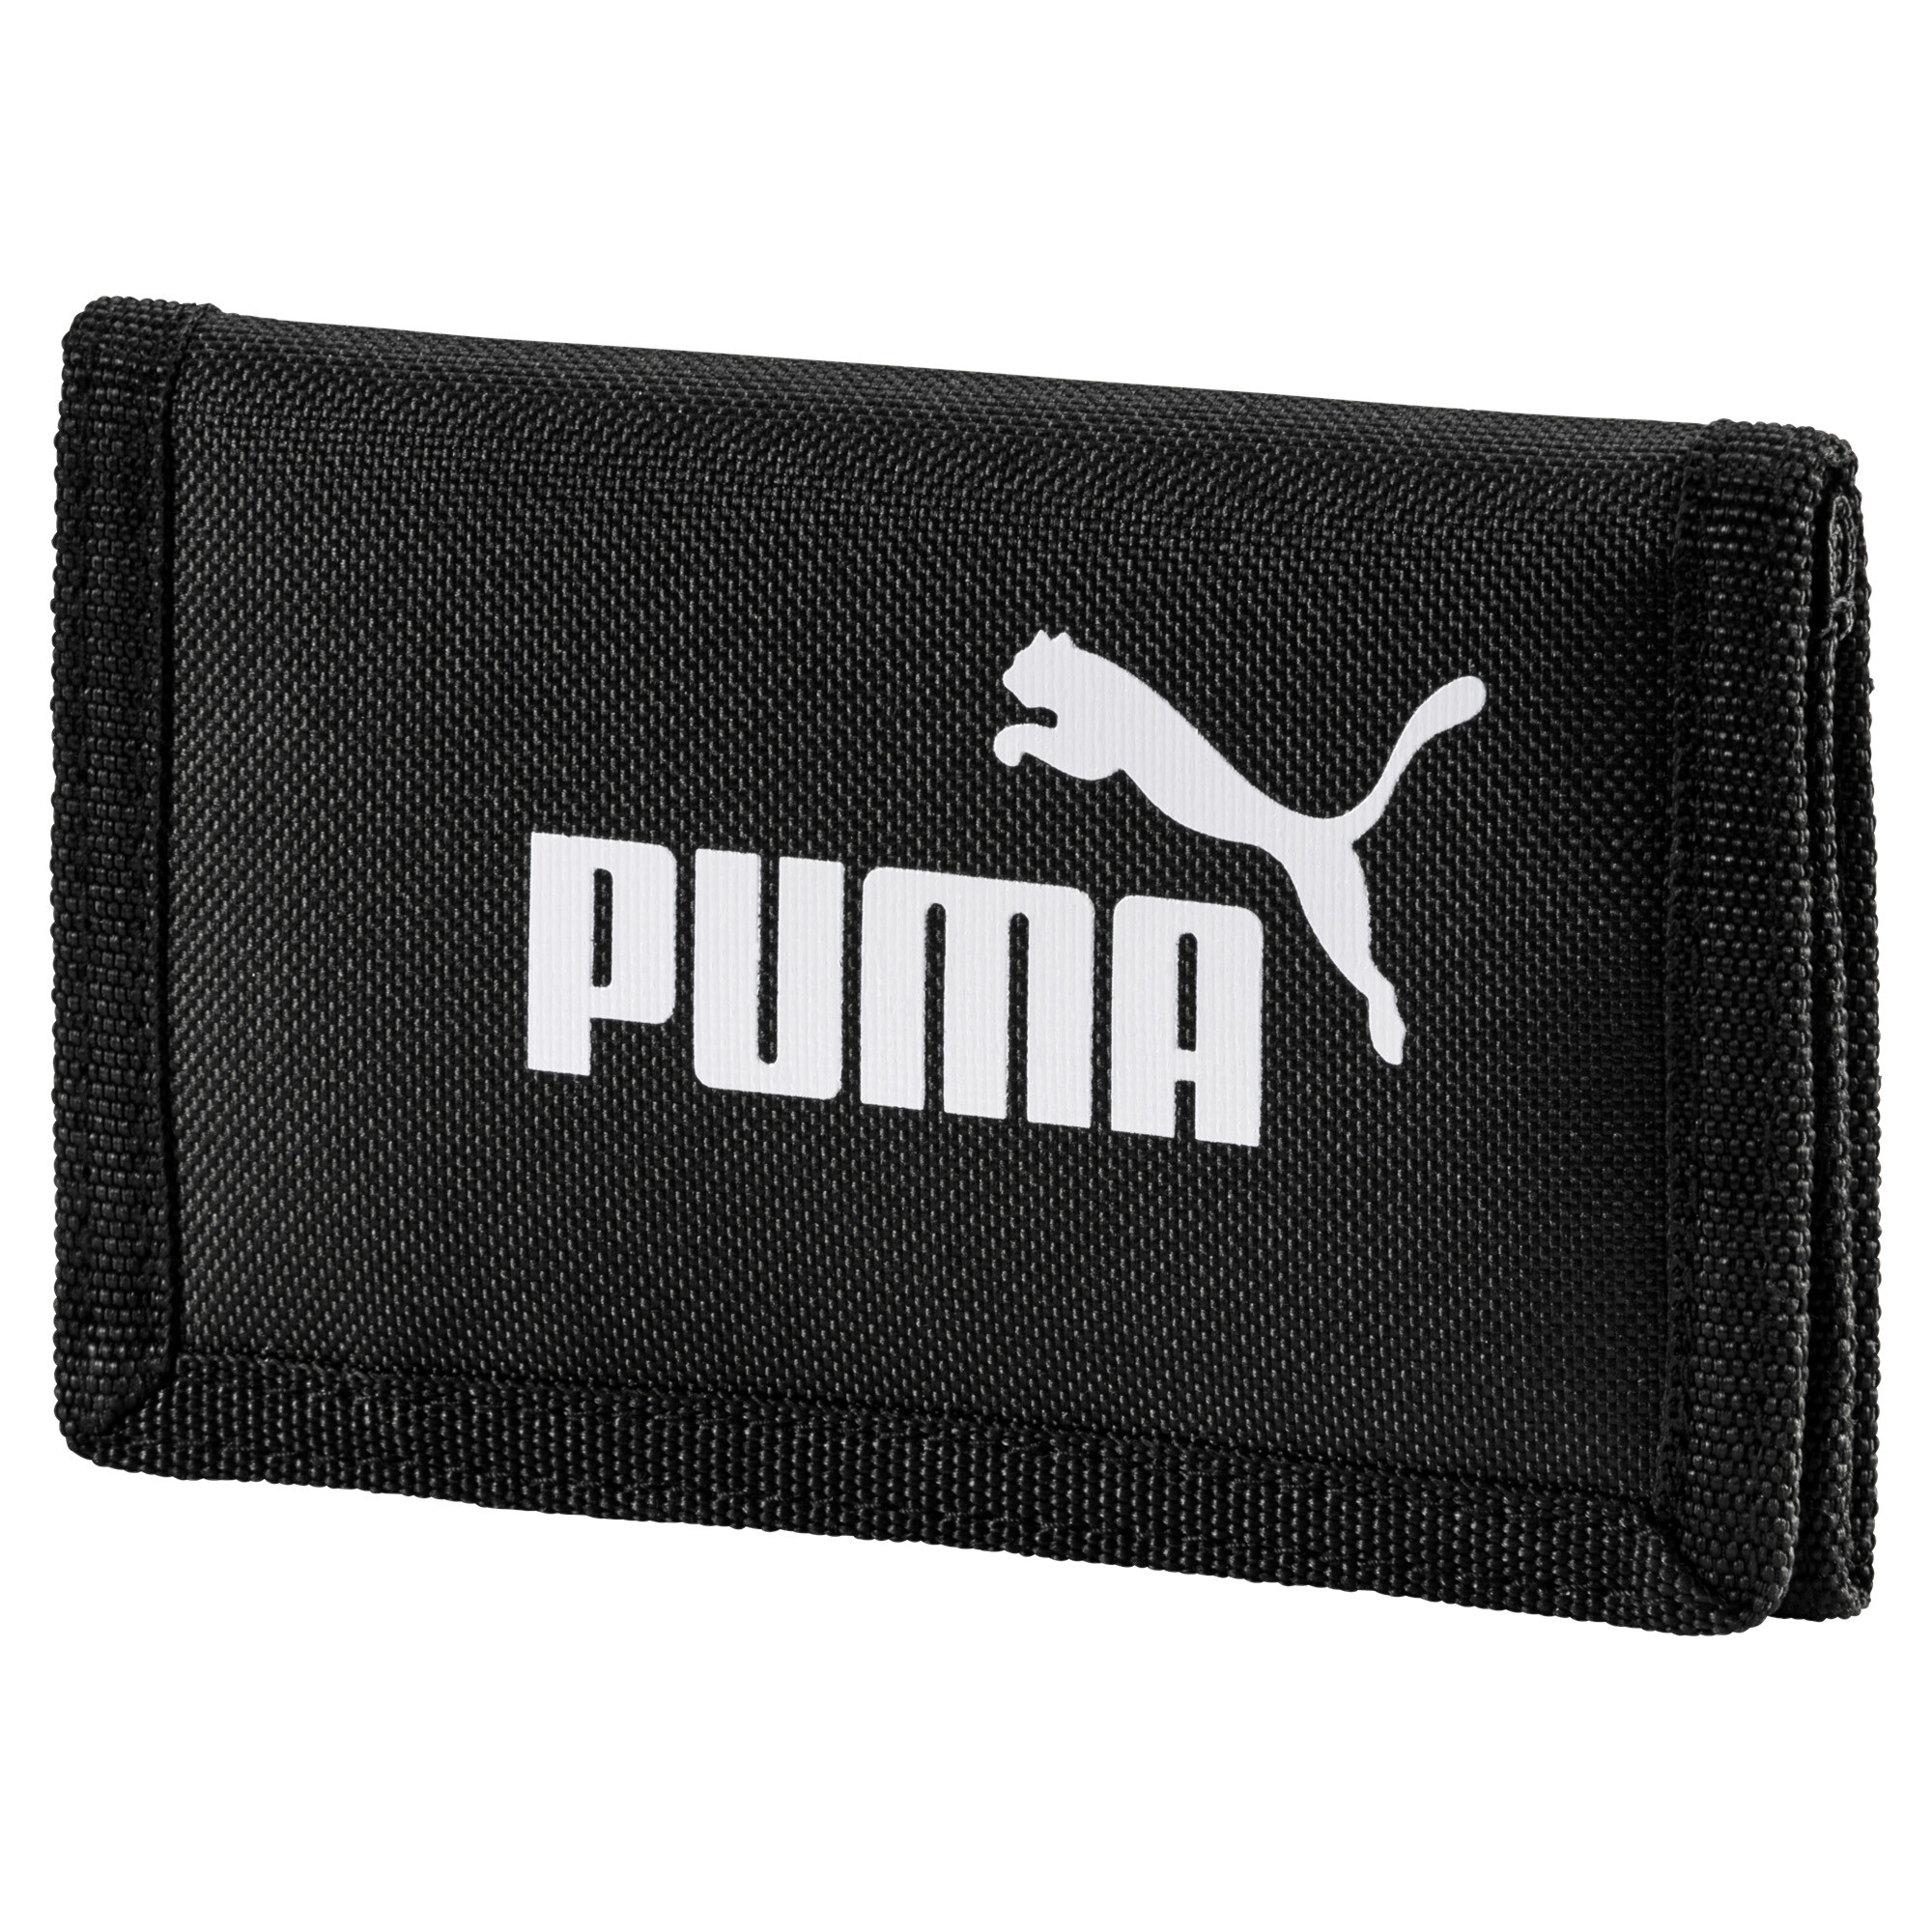 Men's Puma Phase Woven Wallet, Black, Accessories